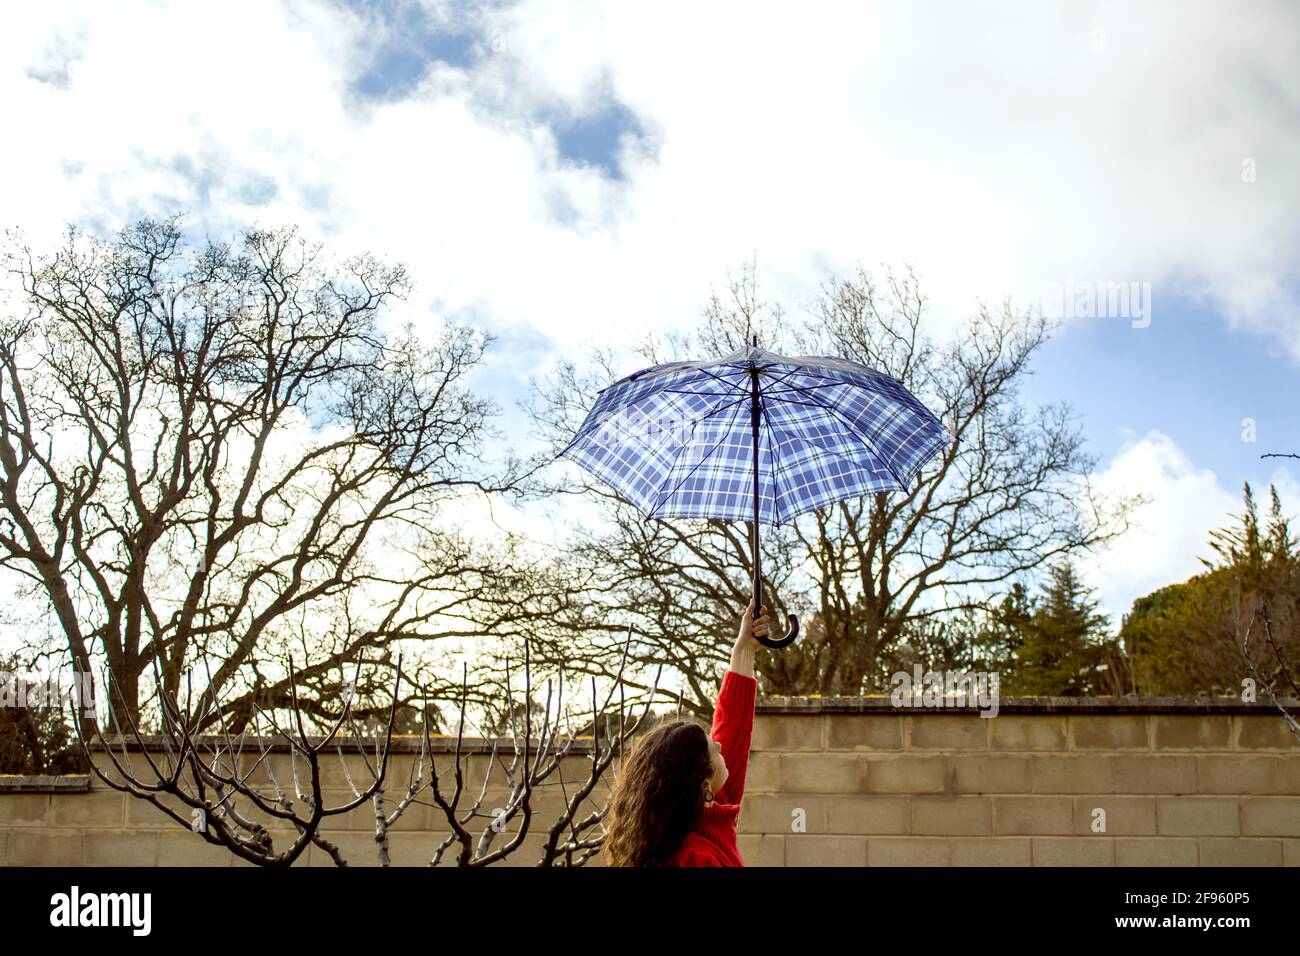 woman's arm holding an umbrella against cloudy sky Stock Photo